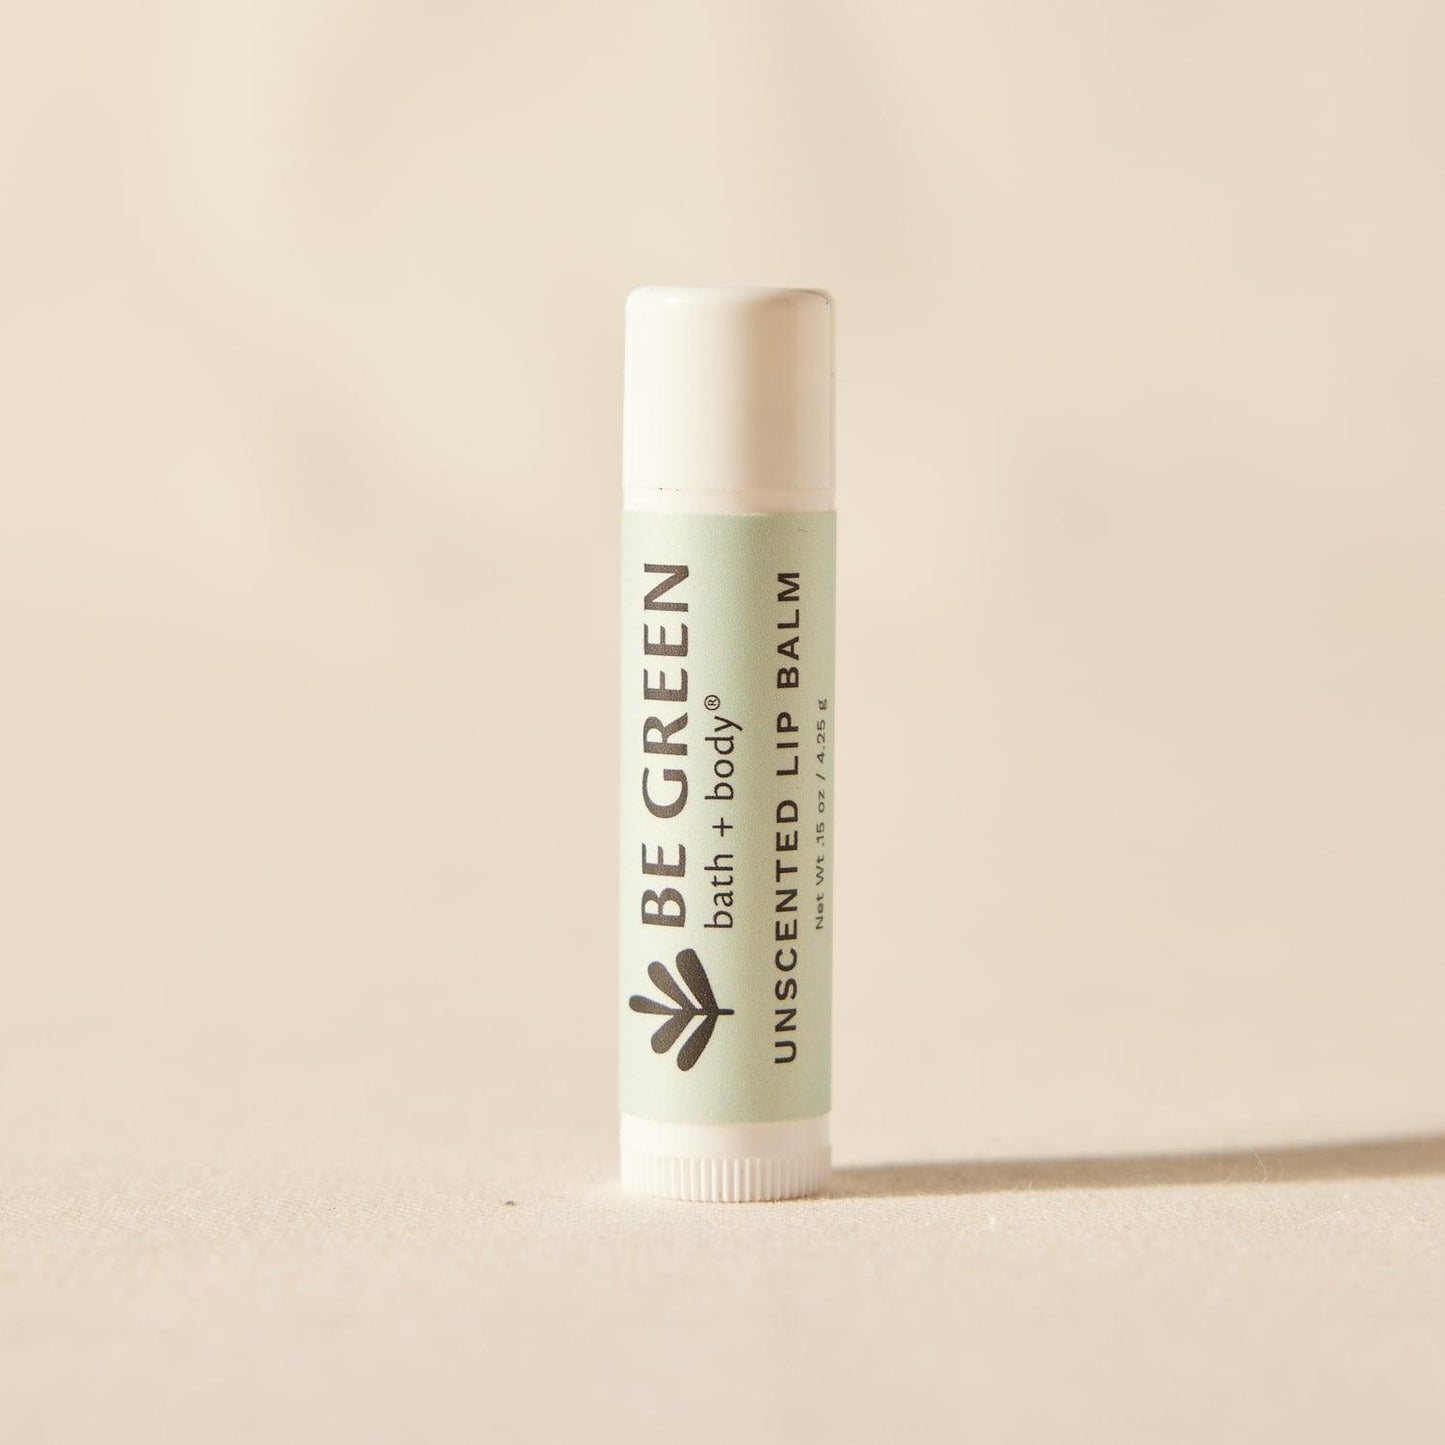 Unscented organic lip balm without zinc oxide.